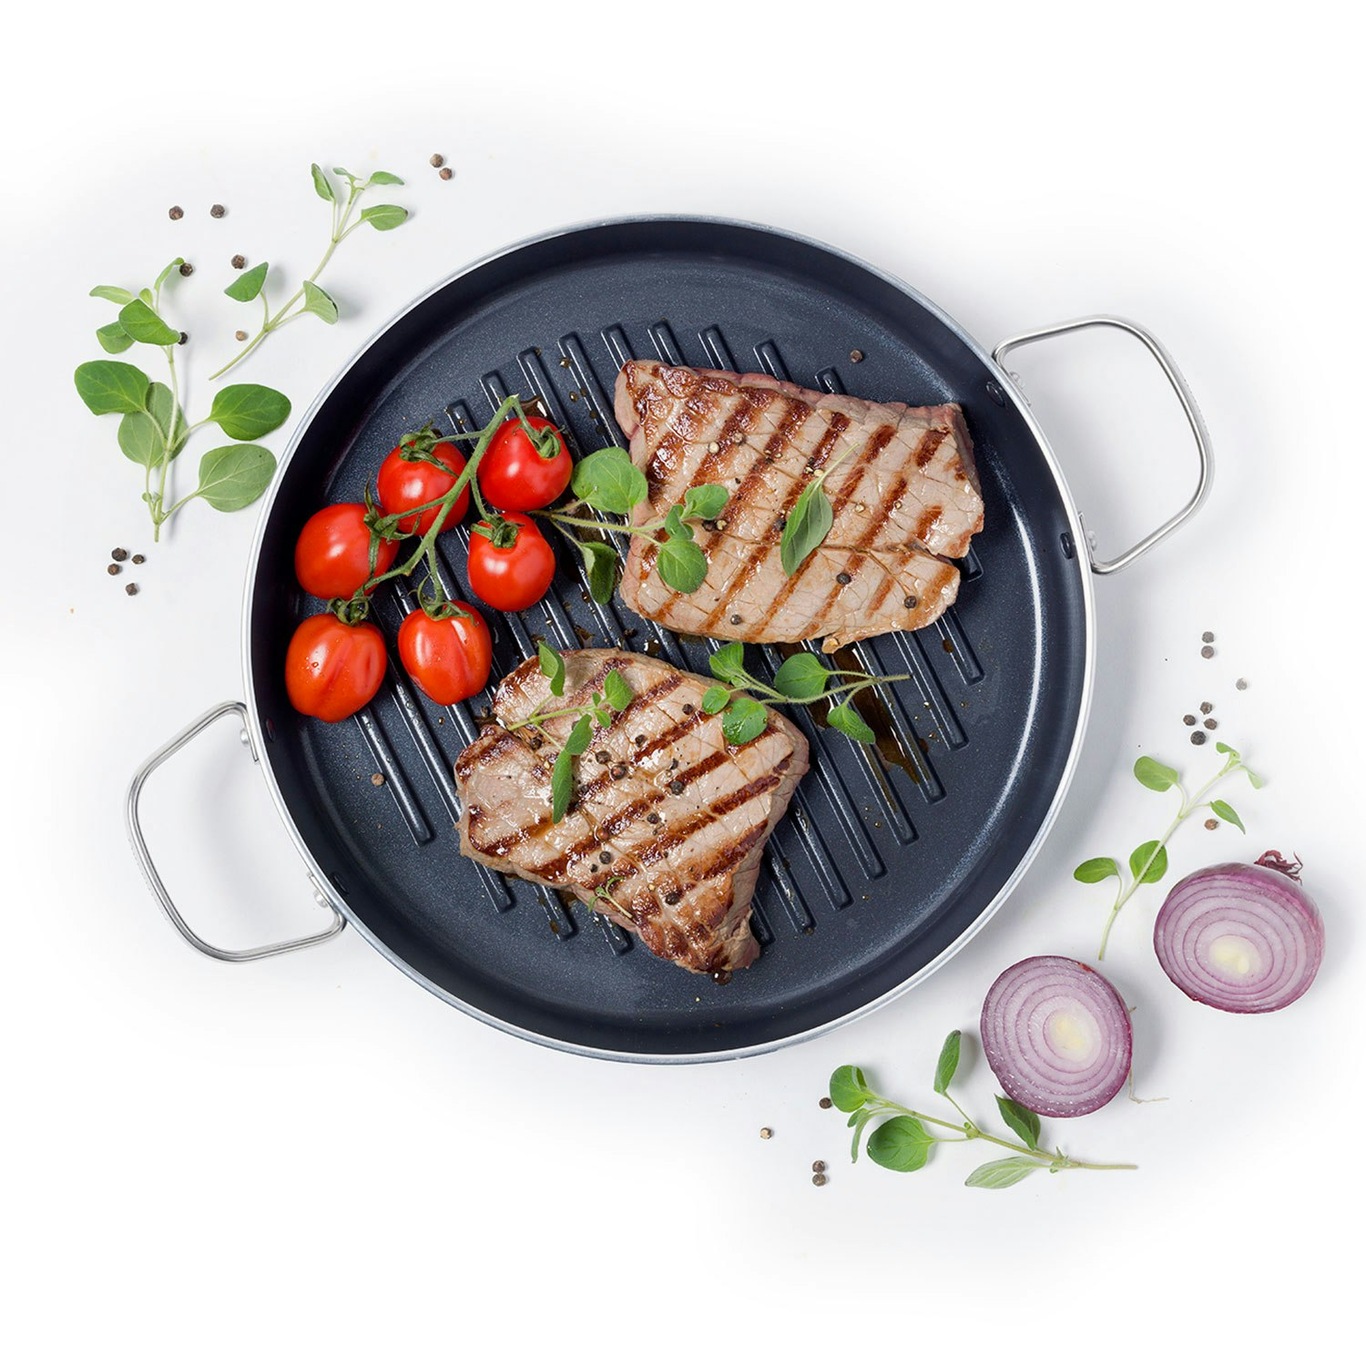 https://royaldesign.com/image/2/greenpan-essentials-round-grill-pan-28cm-1?w=800&quality=80